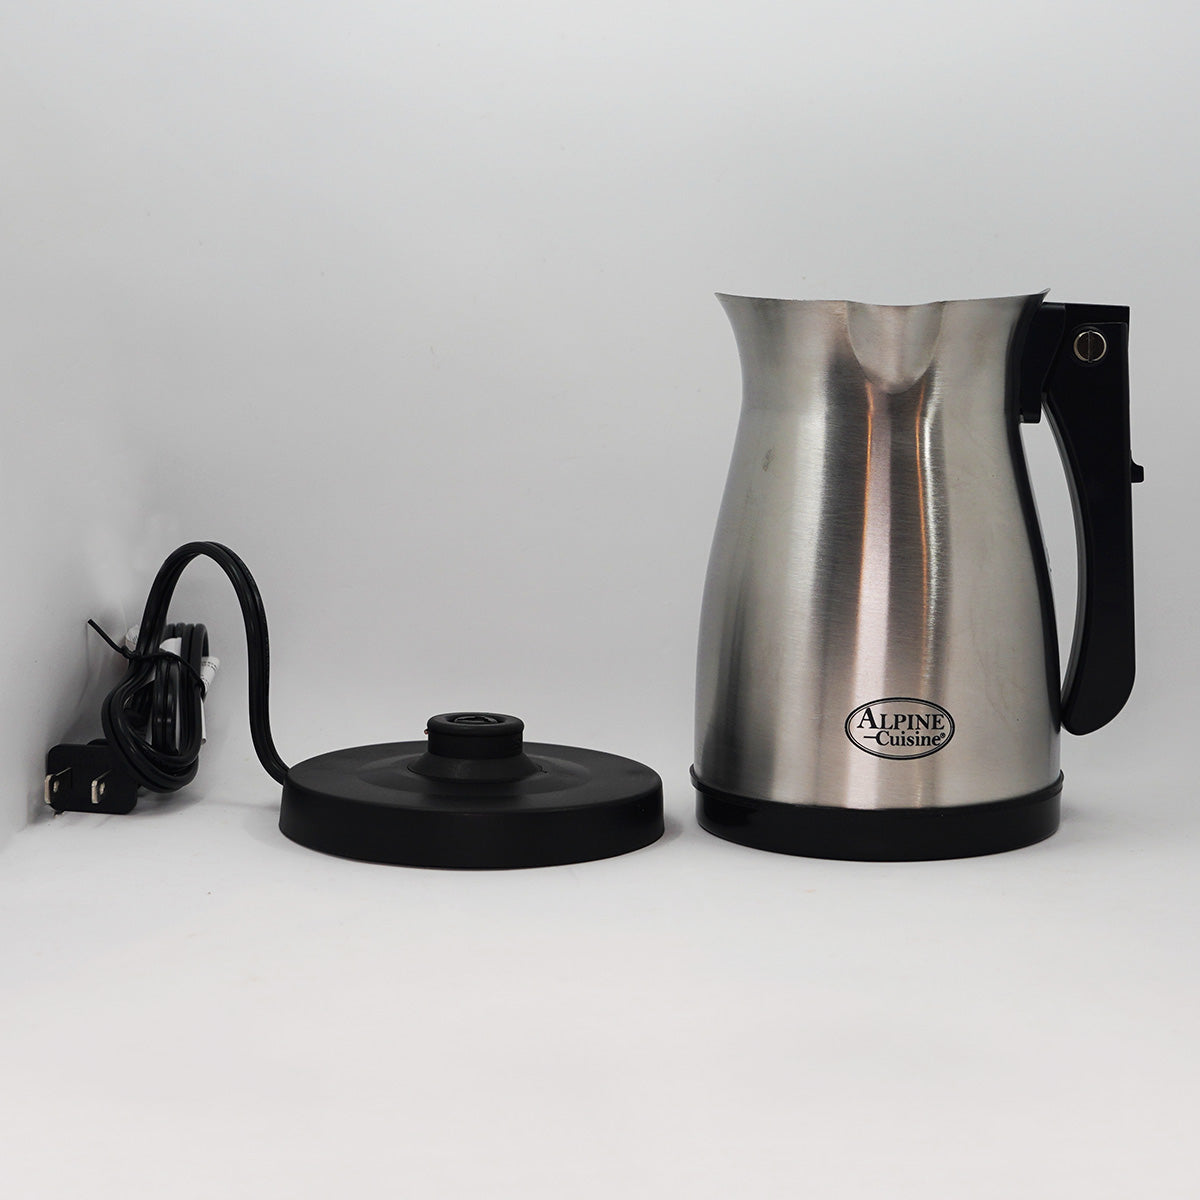 SENSEMAKE Electric Percolator Coffee Maker, Stainless Steel, Quick